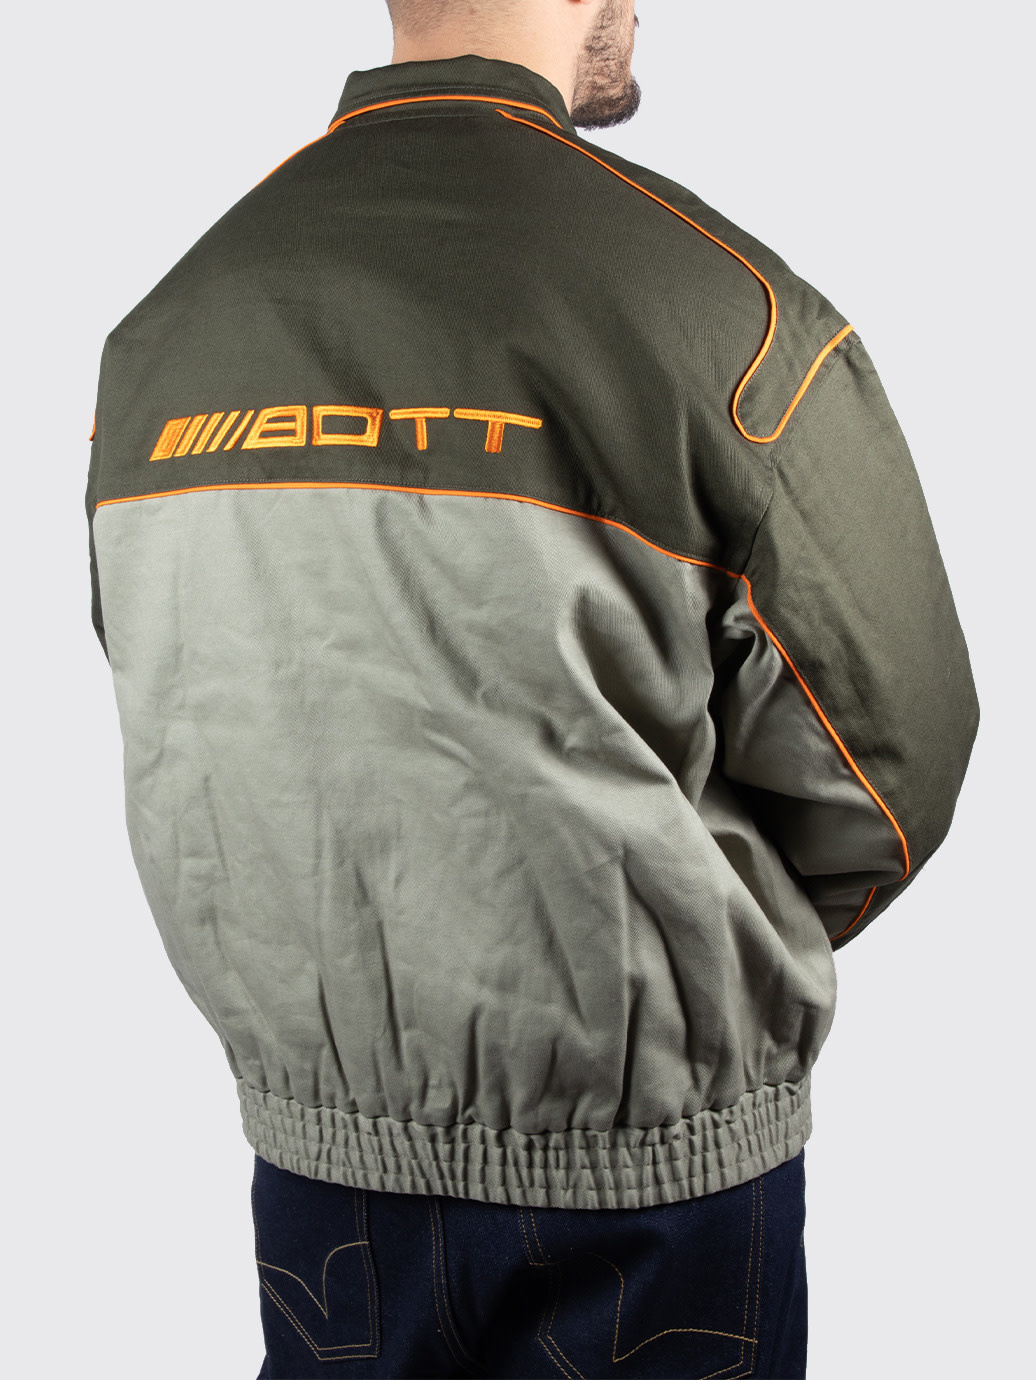 BoTT Cotton Racing Jacket Green - OALLERY